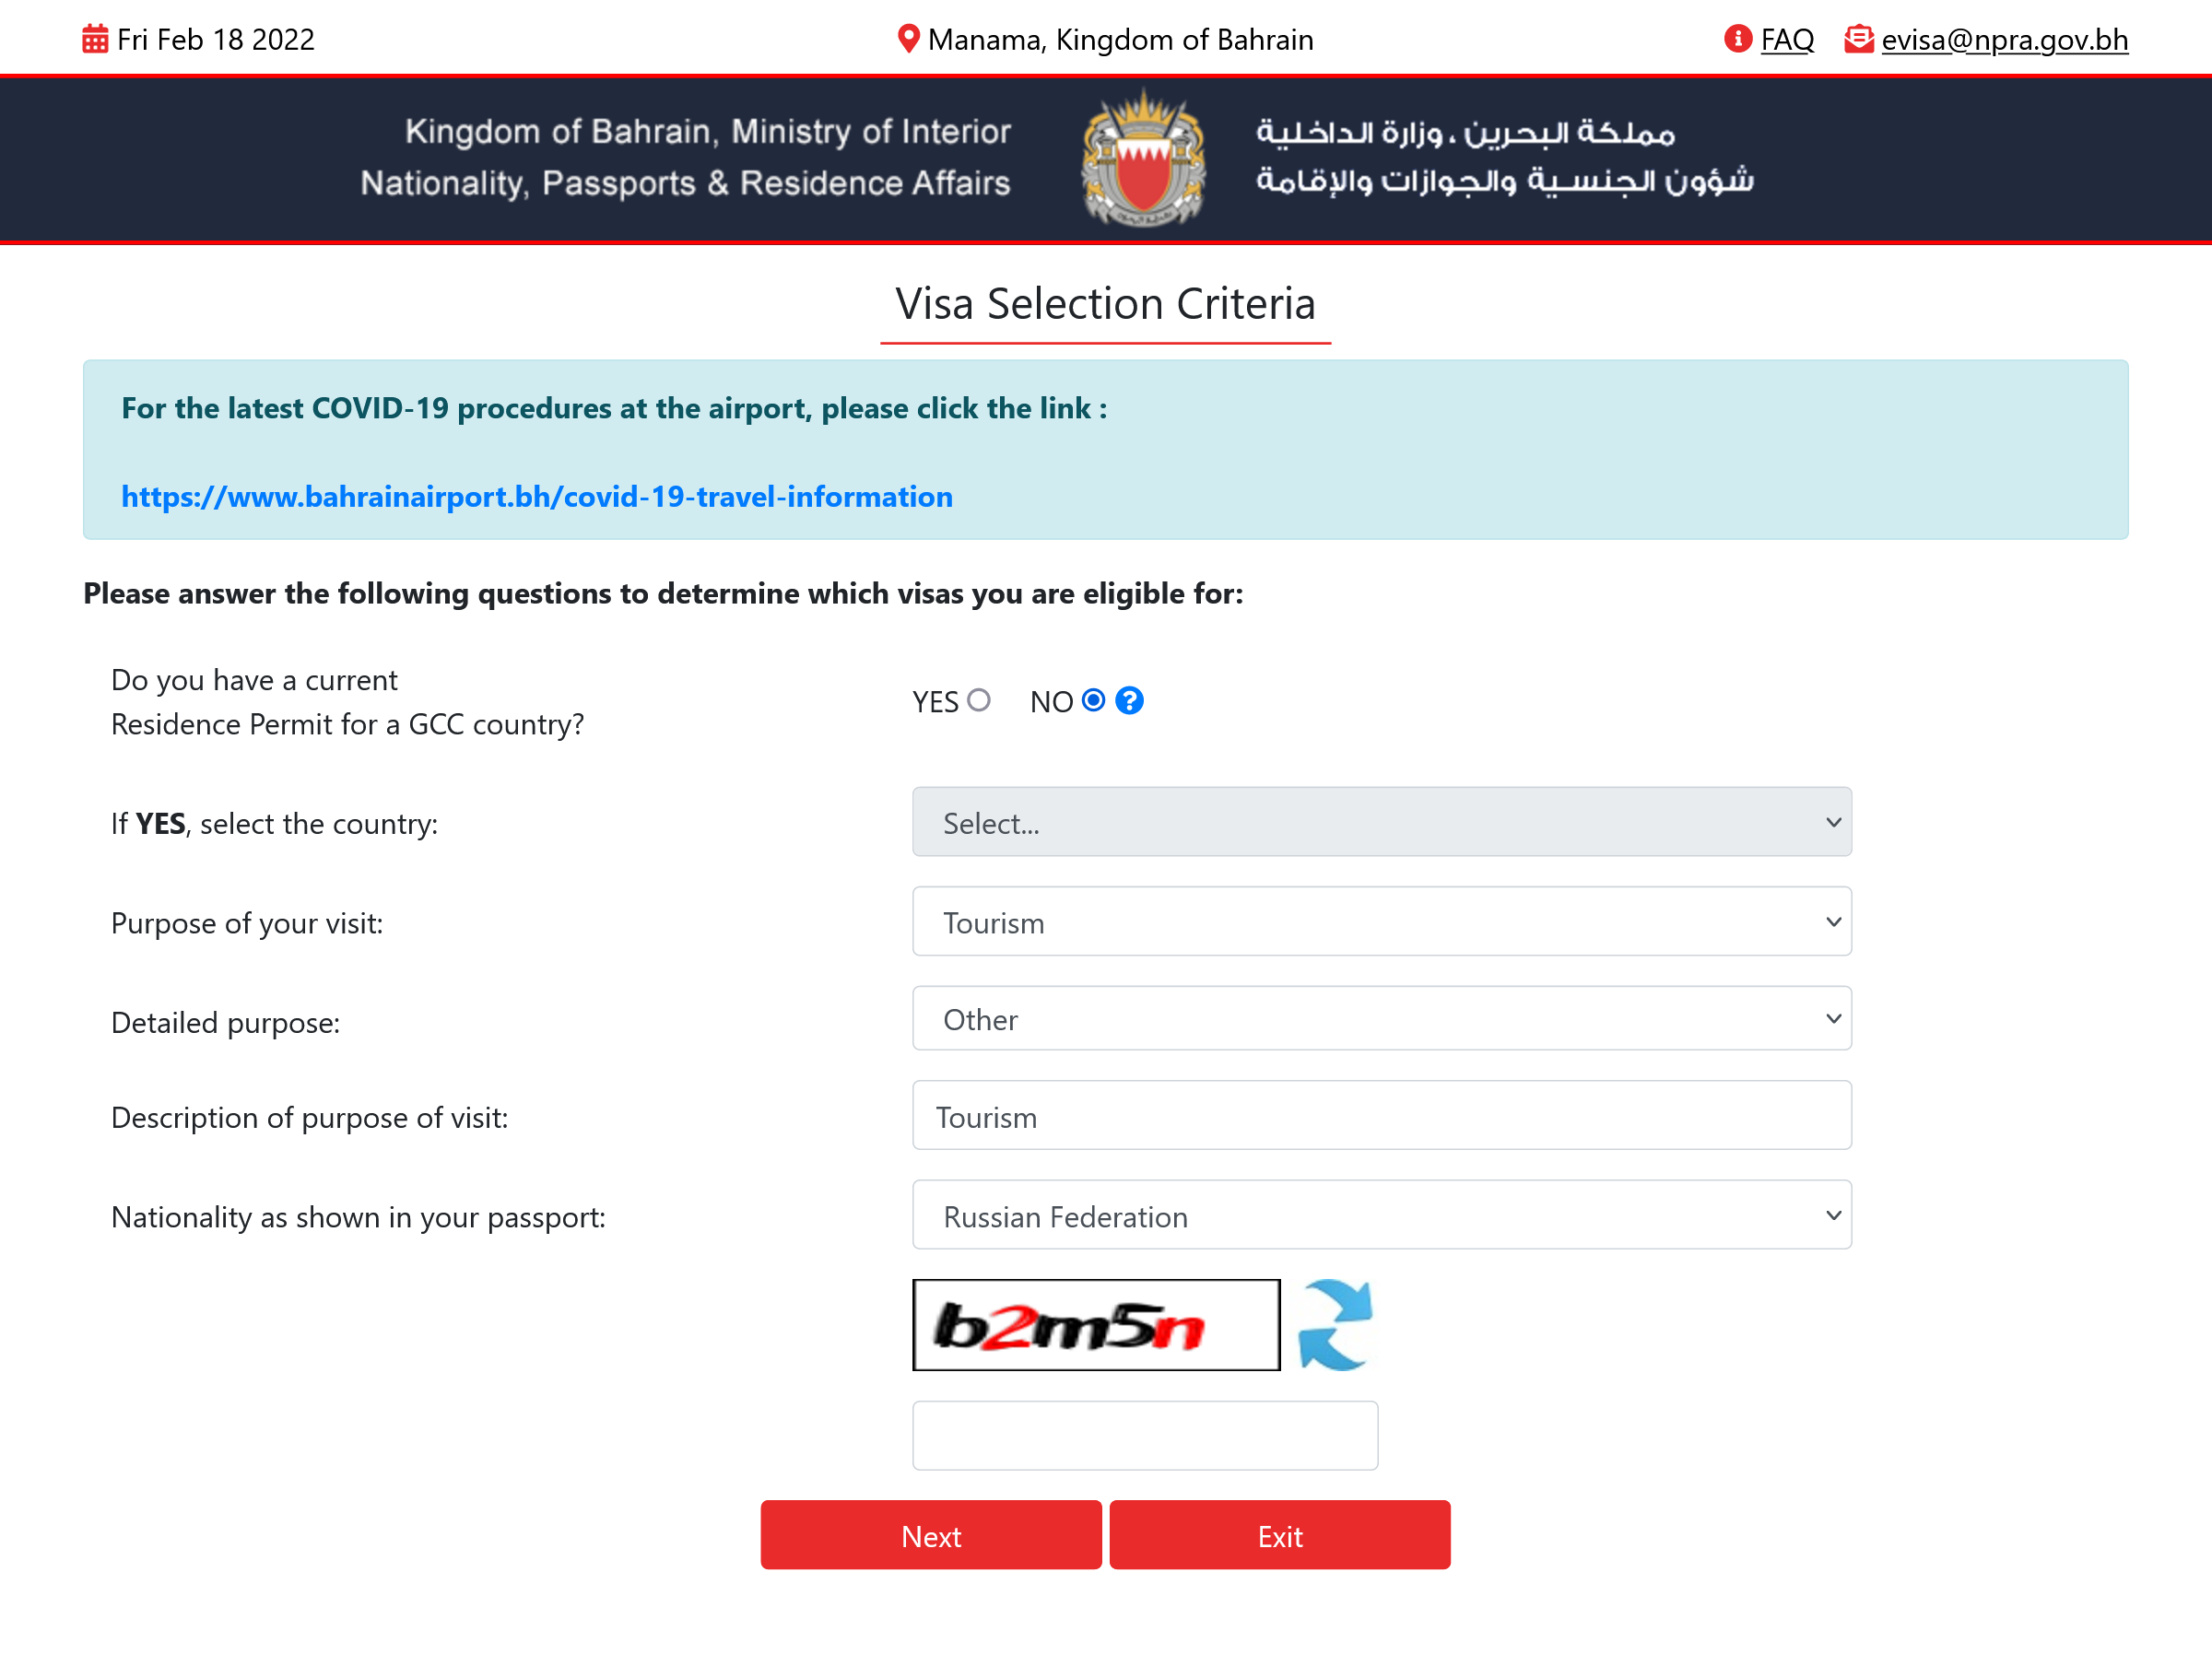 На странице Apply for Visa заполните поля о гражданстве и цели визита и нажмите Next